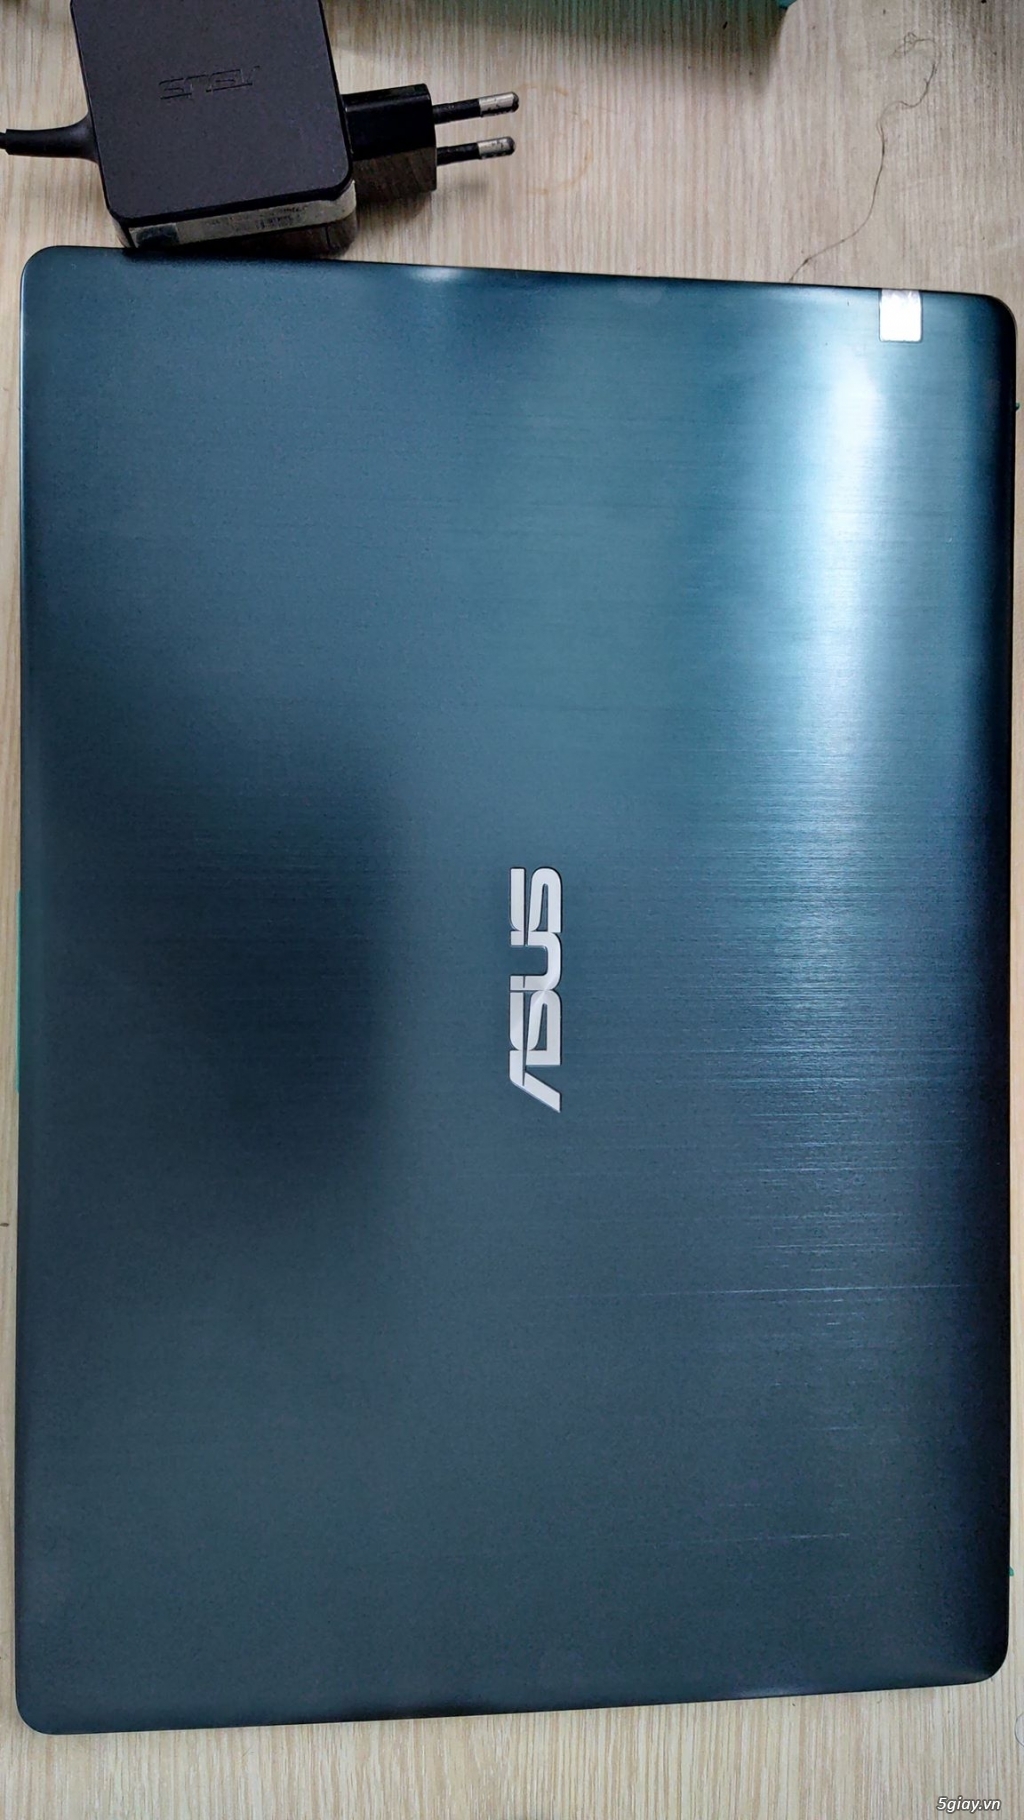 Asus Vivobook S430UA/ i3-8130U/ 8GB/ UHD Graphics 620, còn BH 2 tháng - 4